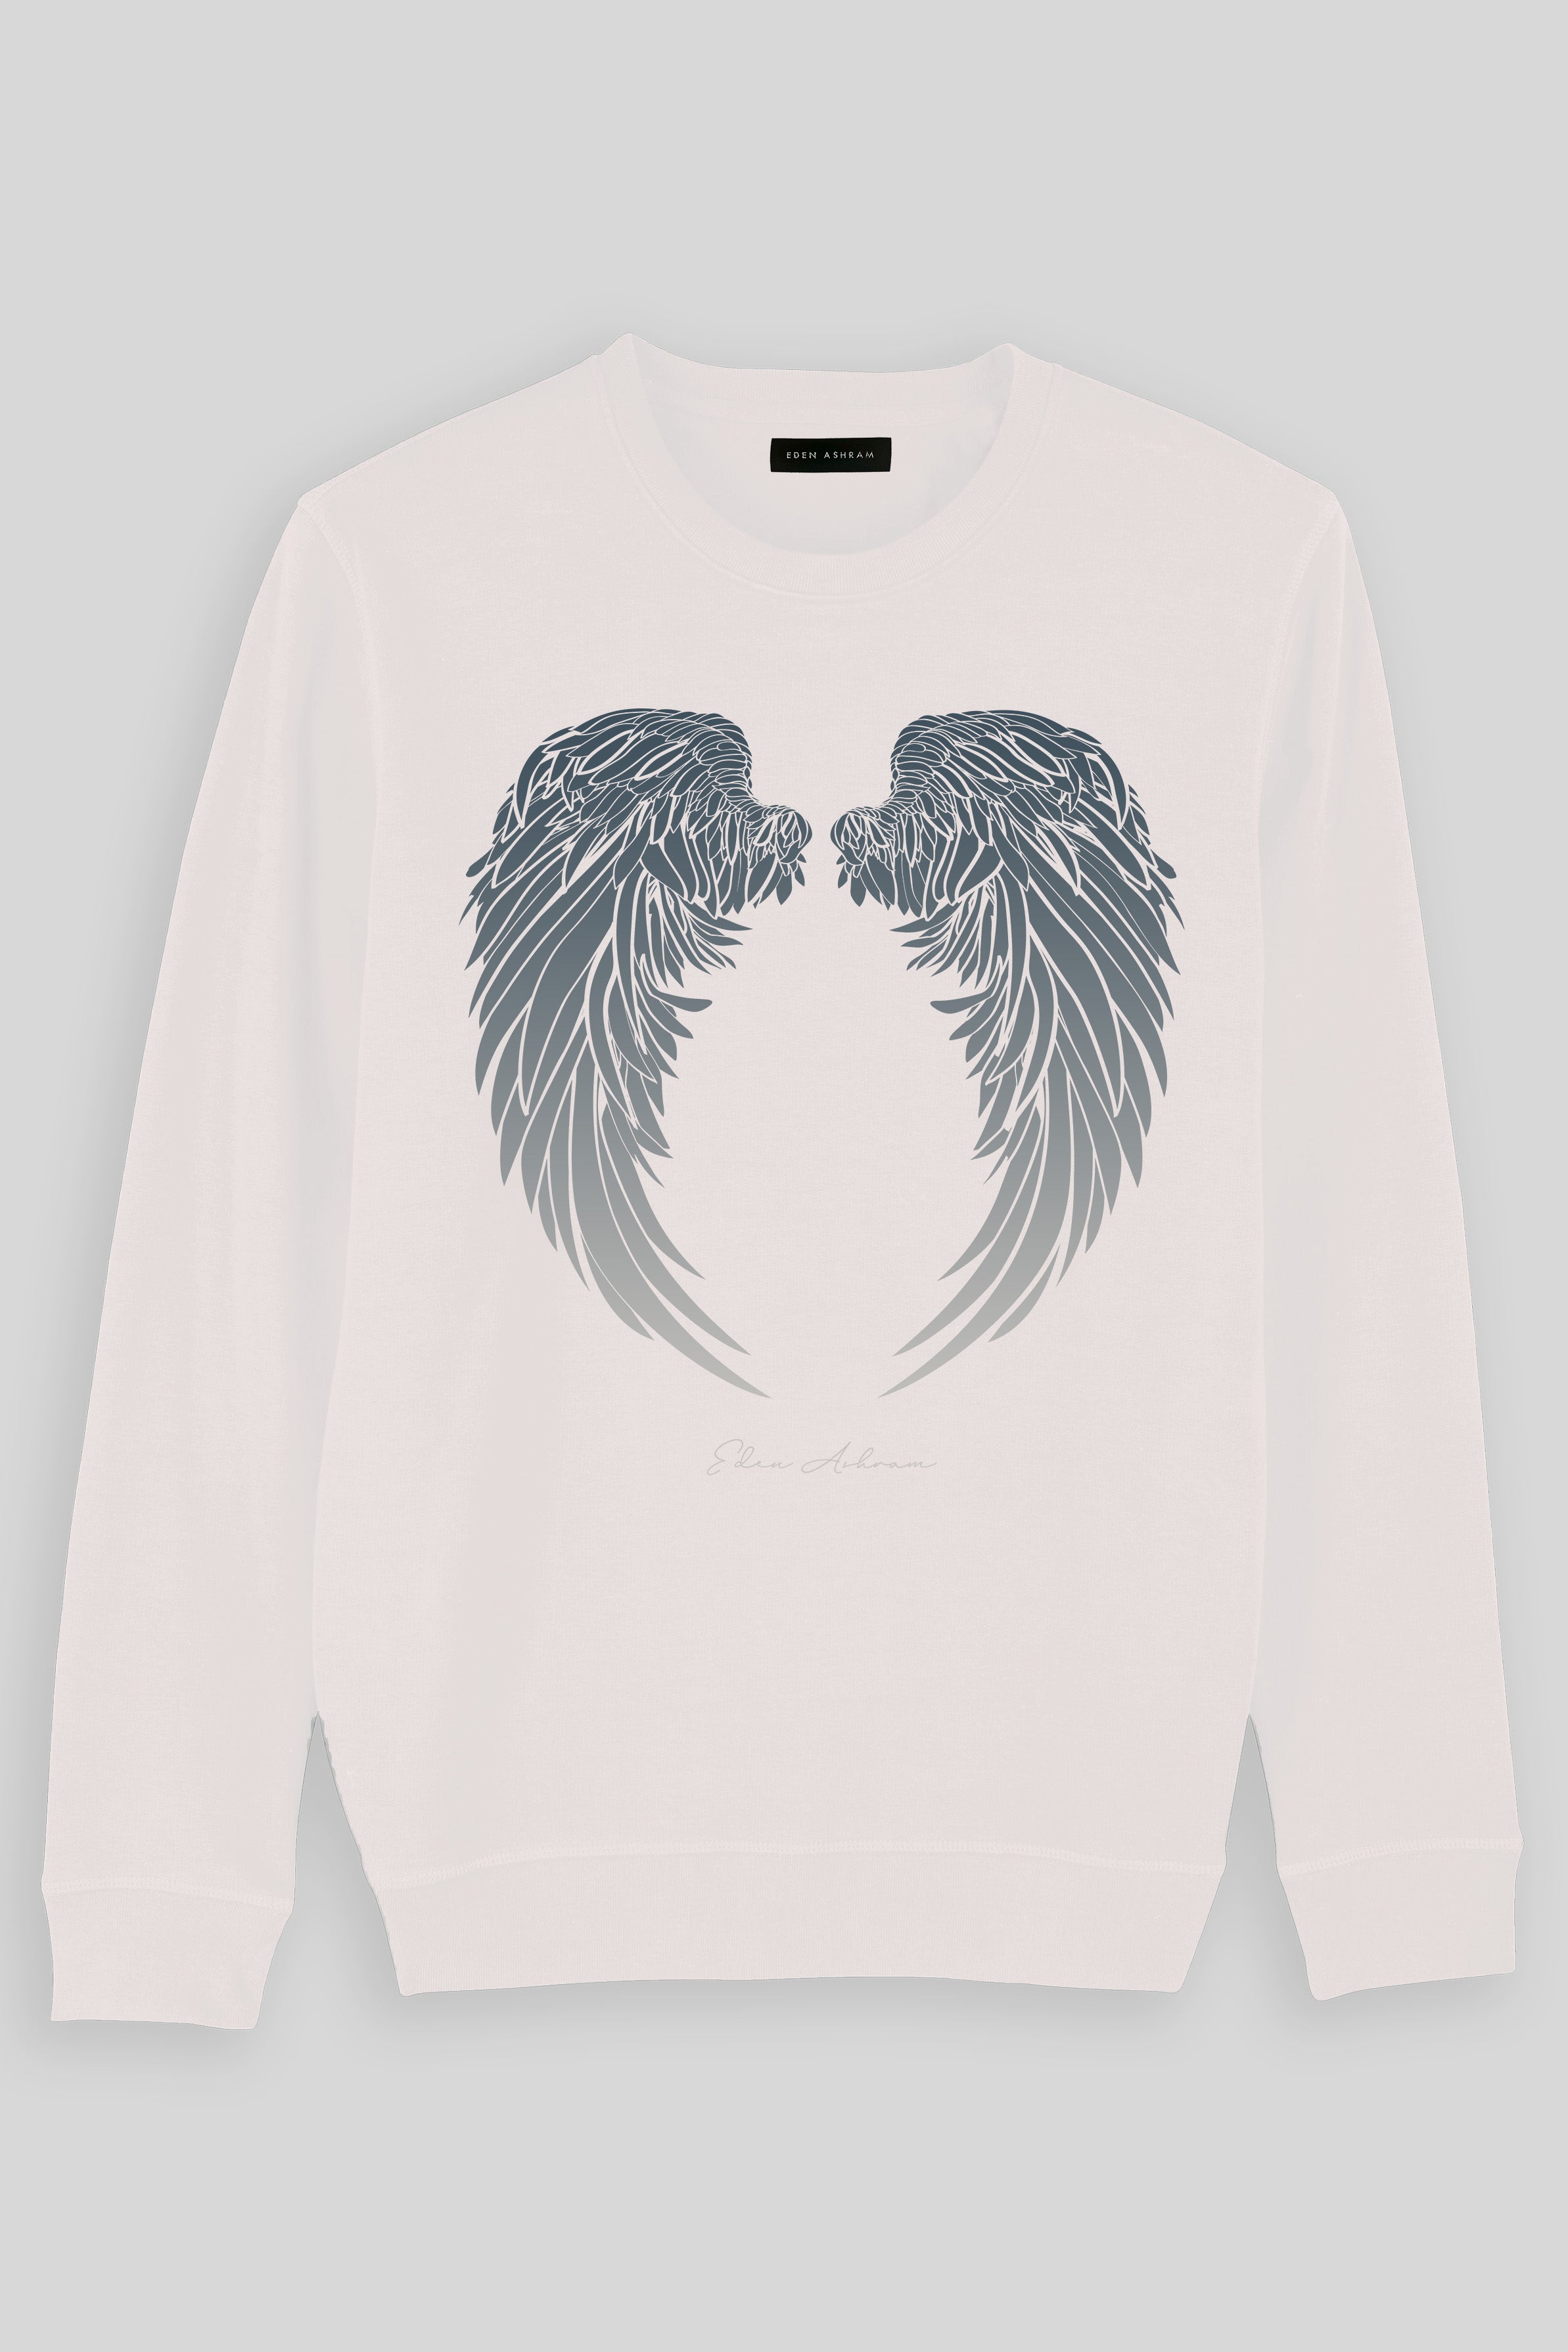 Eden Ashram Angel Wings Premium Crew Neck Sweatshirt Vintage White